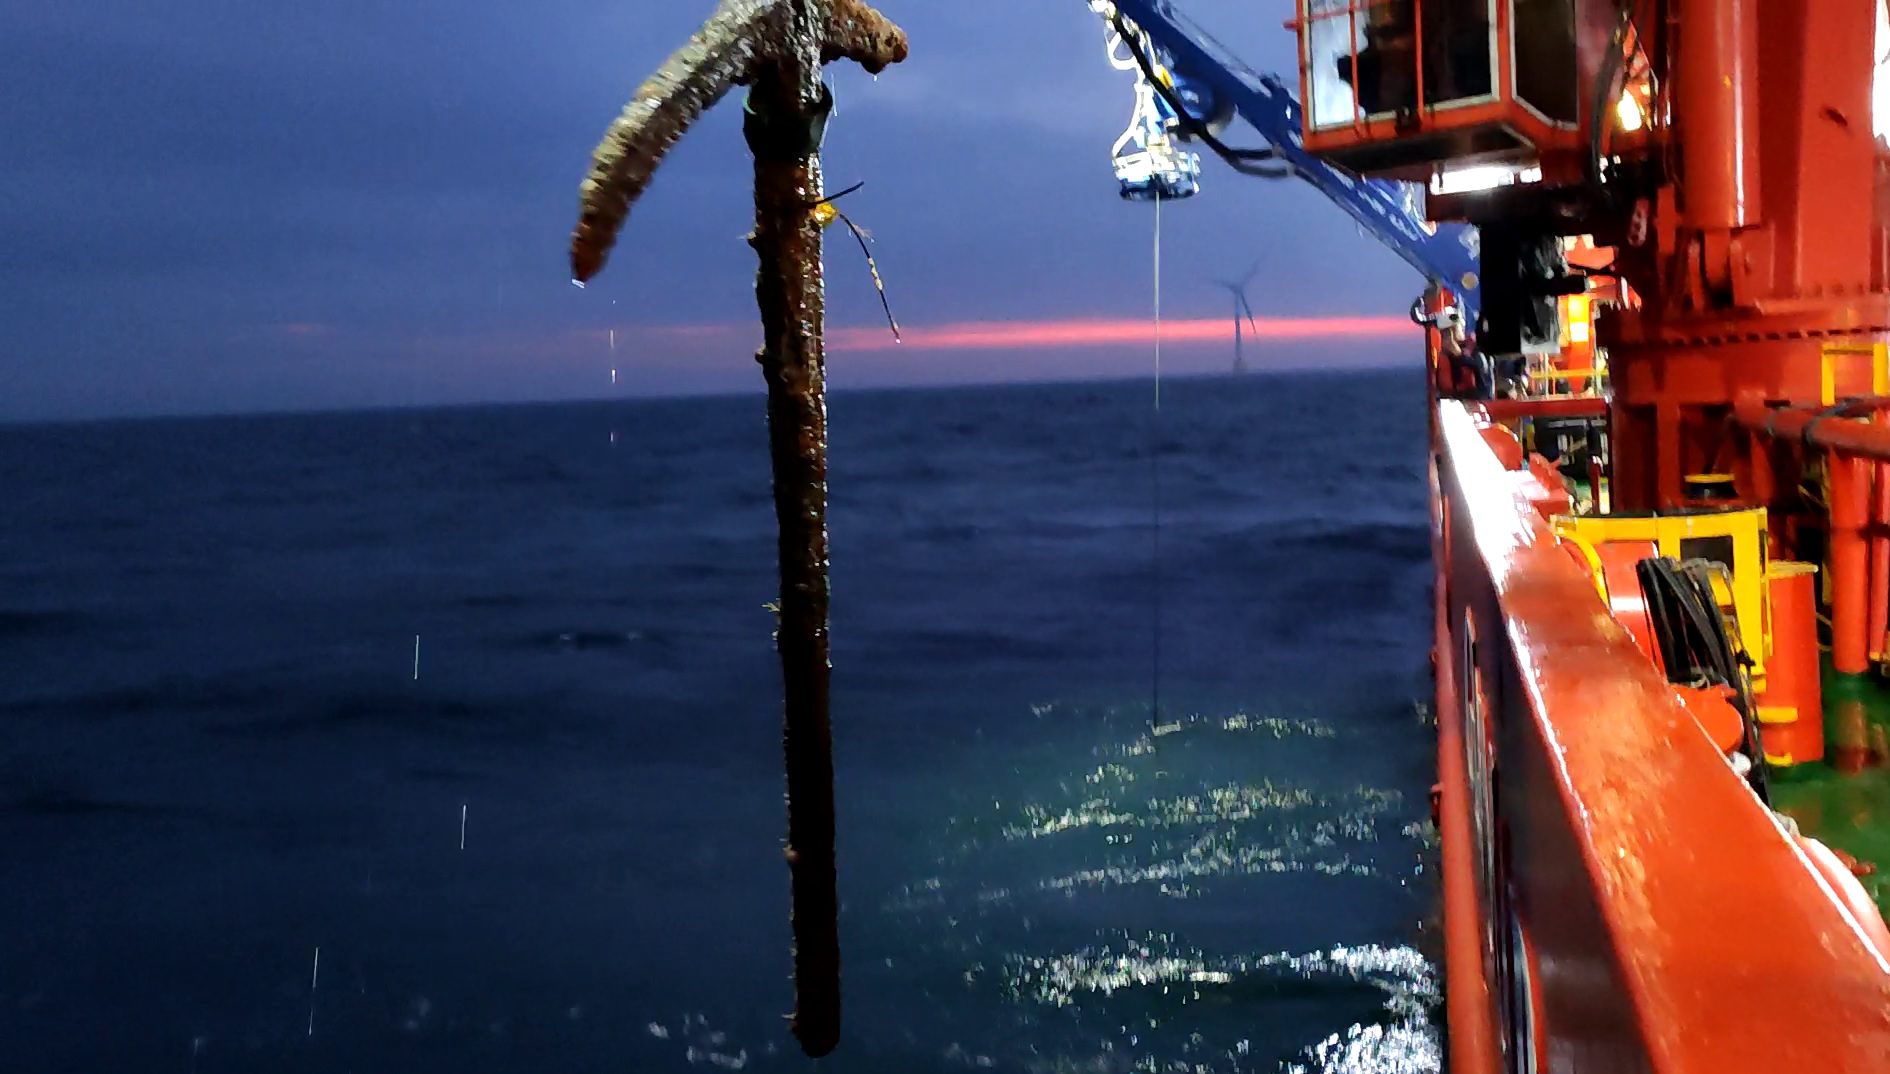 Roman anchor retrieved from North Sea